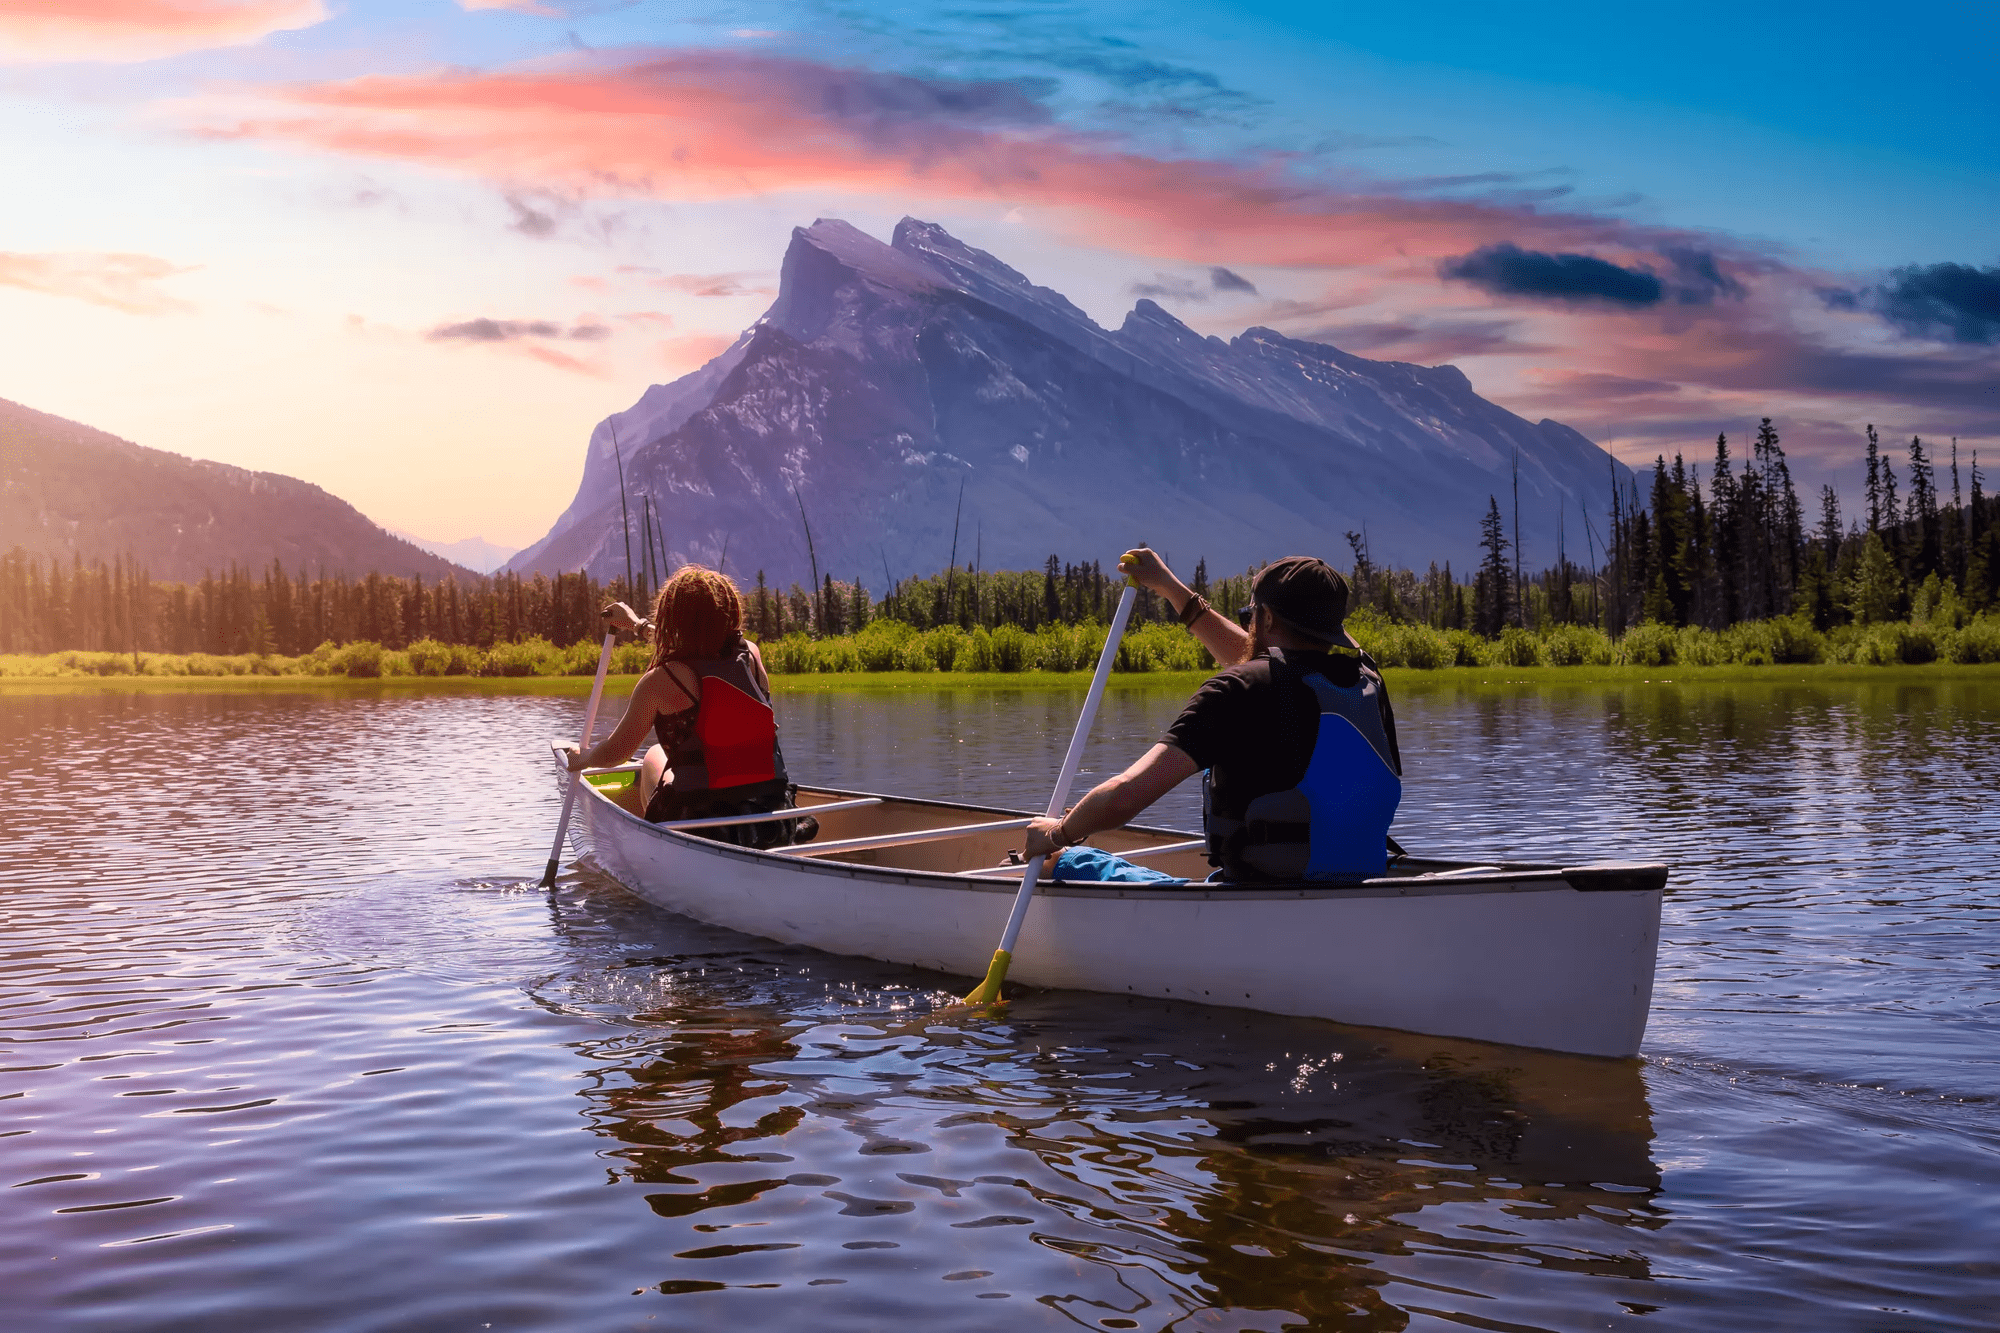 23-daagse camperrondreis West-Canada vanuit Vancouver met Canadream